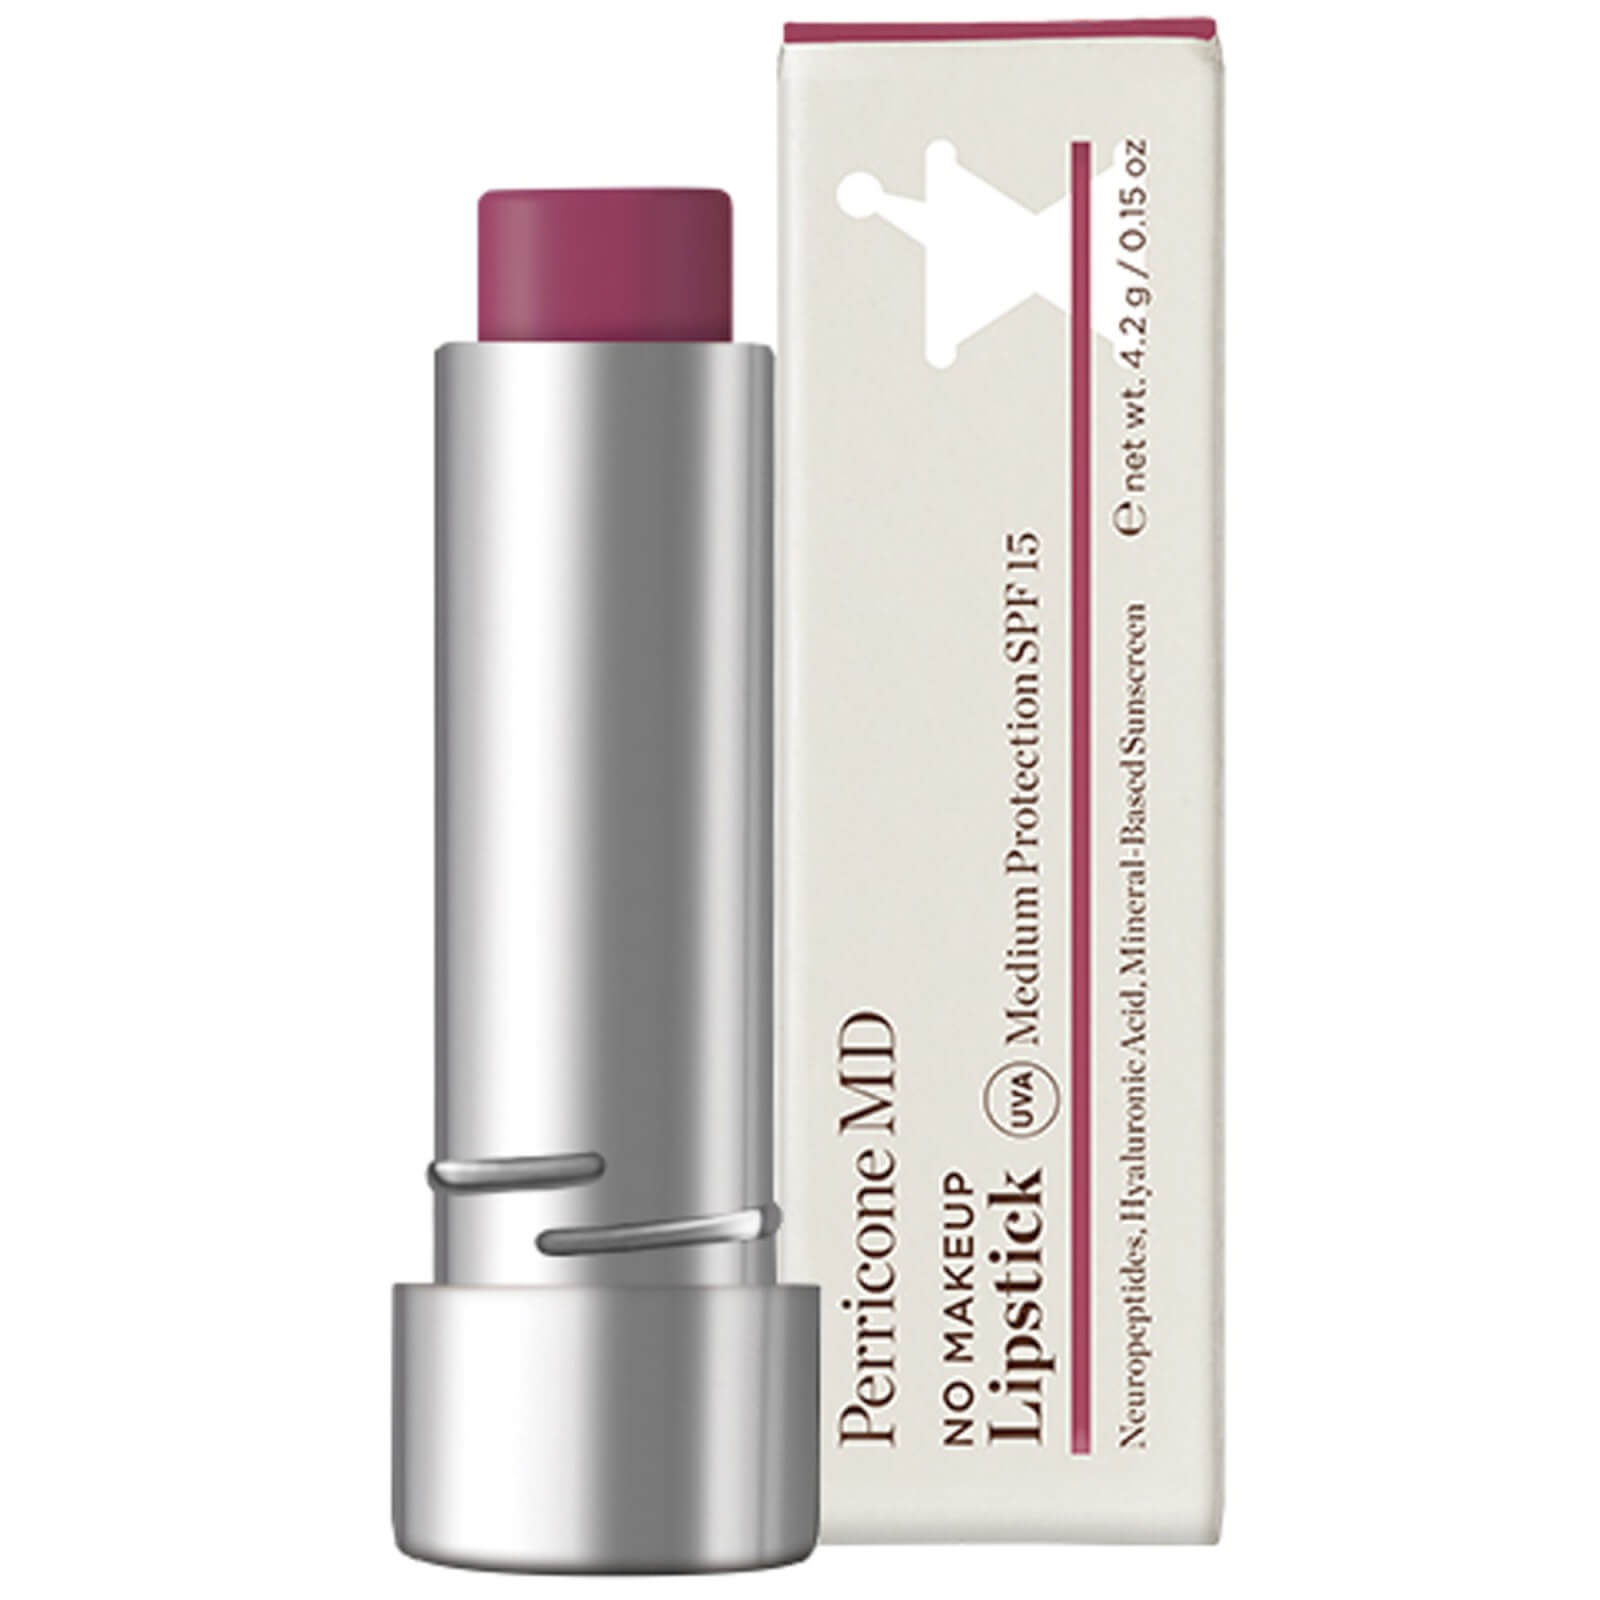 Perricone MD No Makeup Lipstick SPF 15 4.2g (Various Shades) - 2 Rose